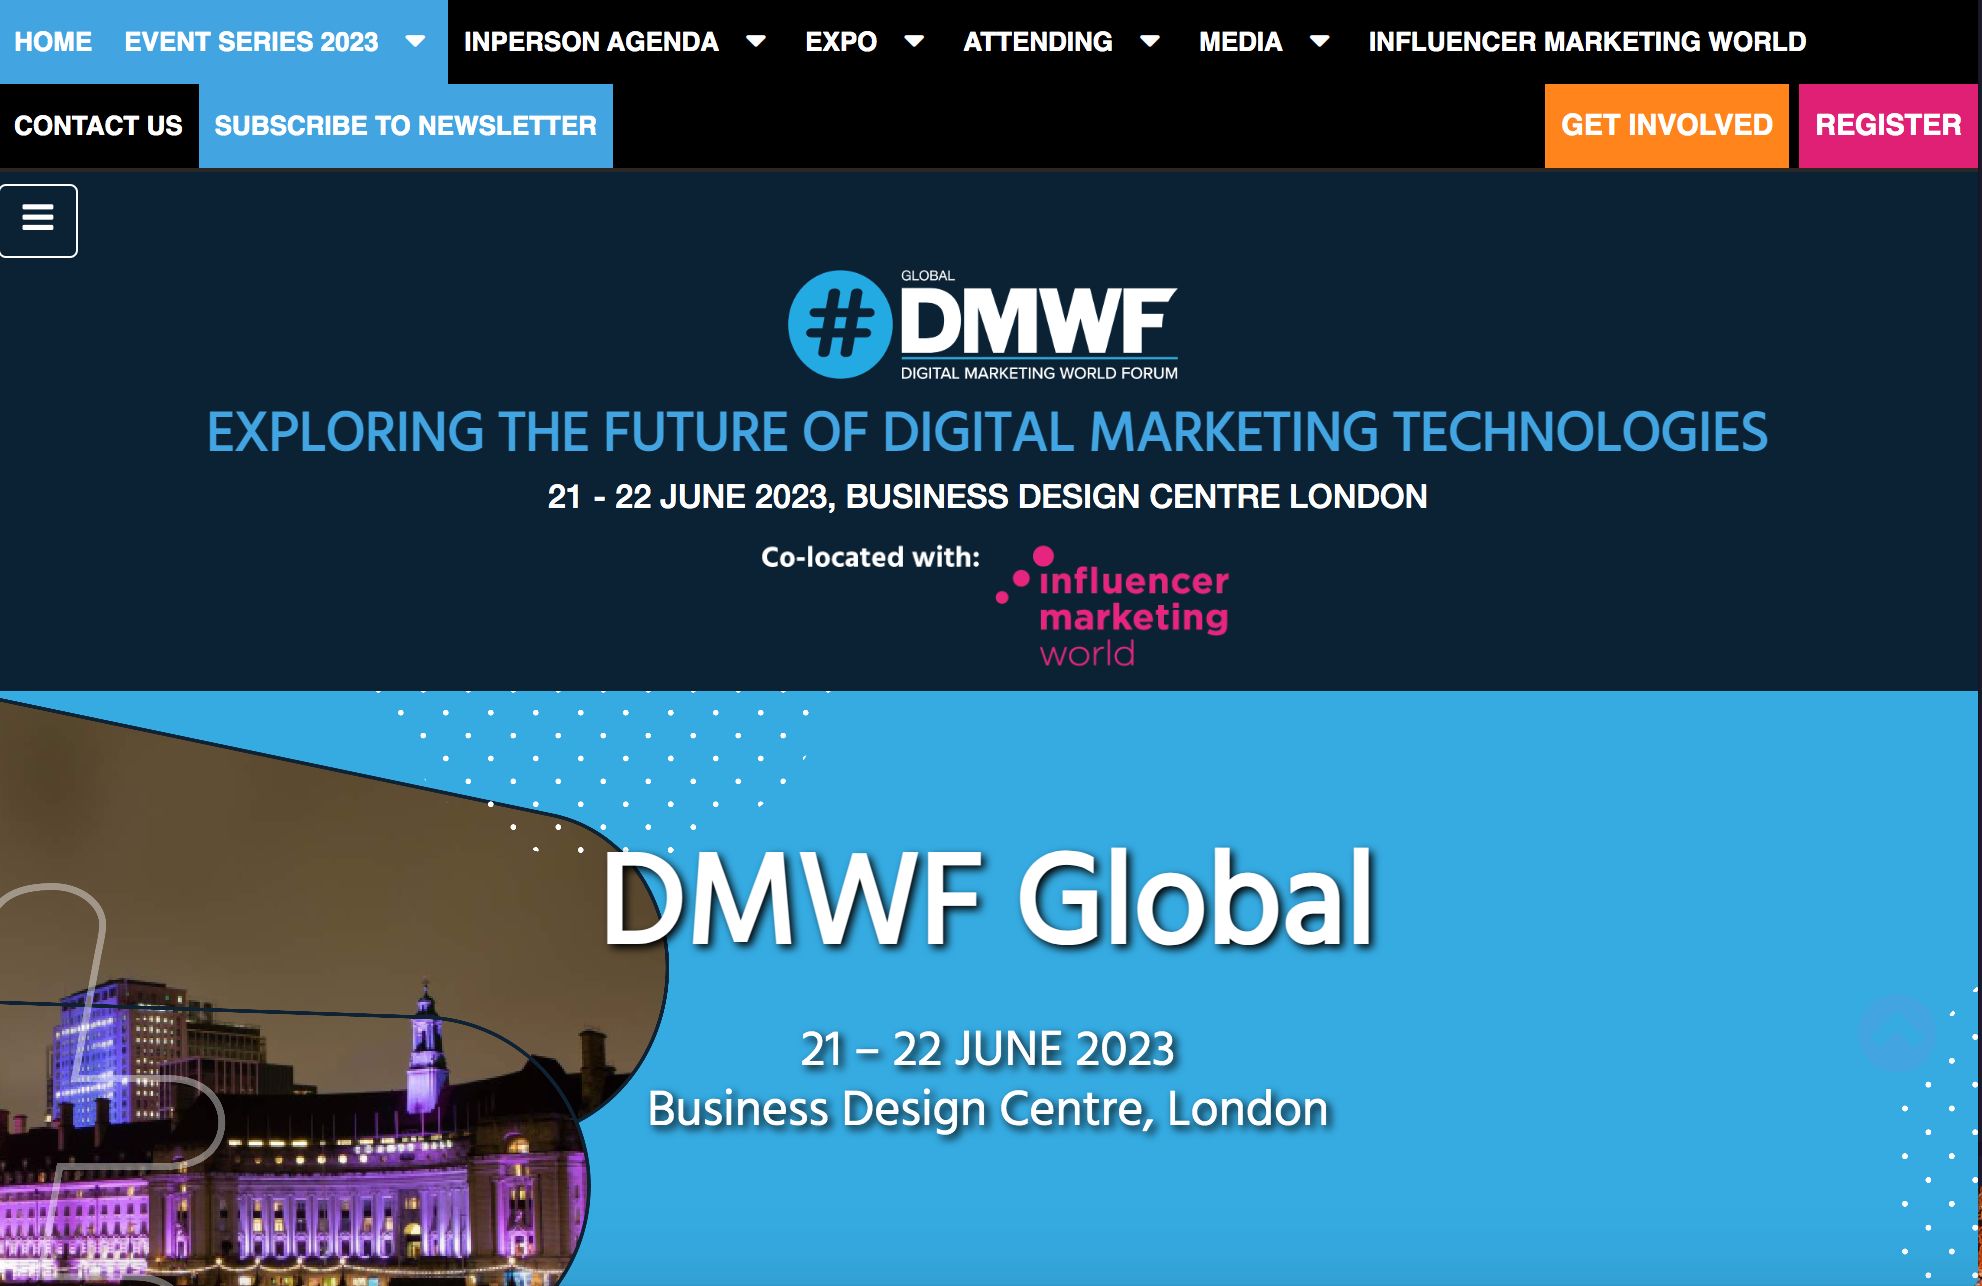 Marketing event worth visiting in 2023: Digital Marketing World Forum Global